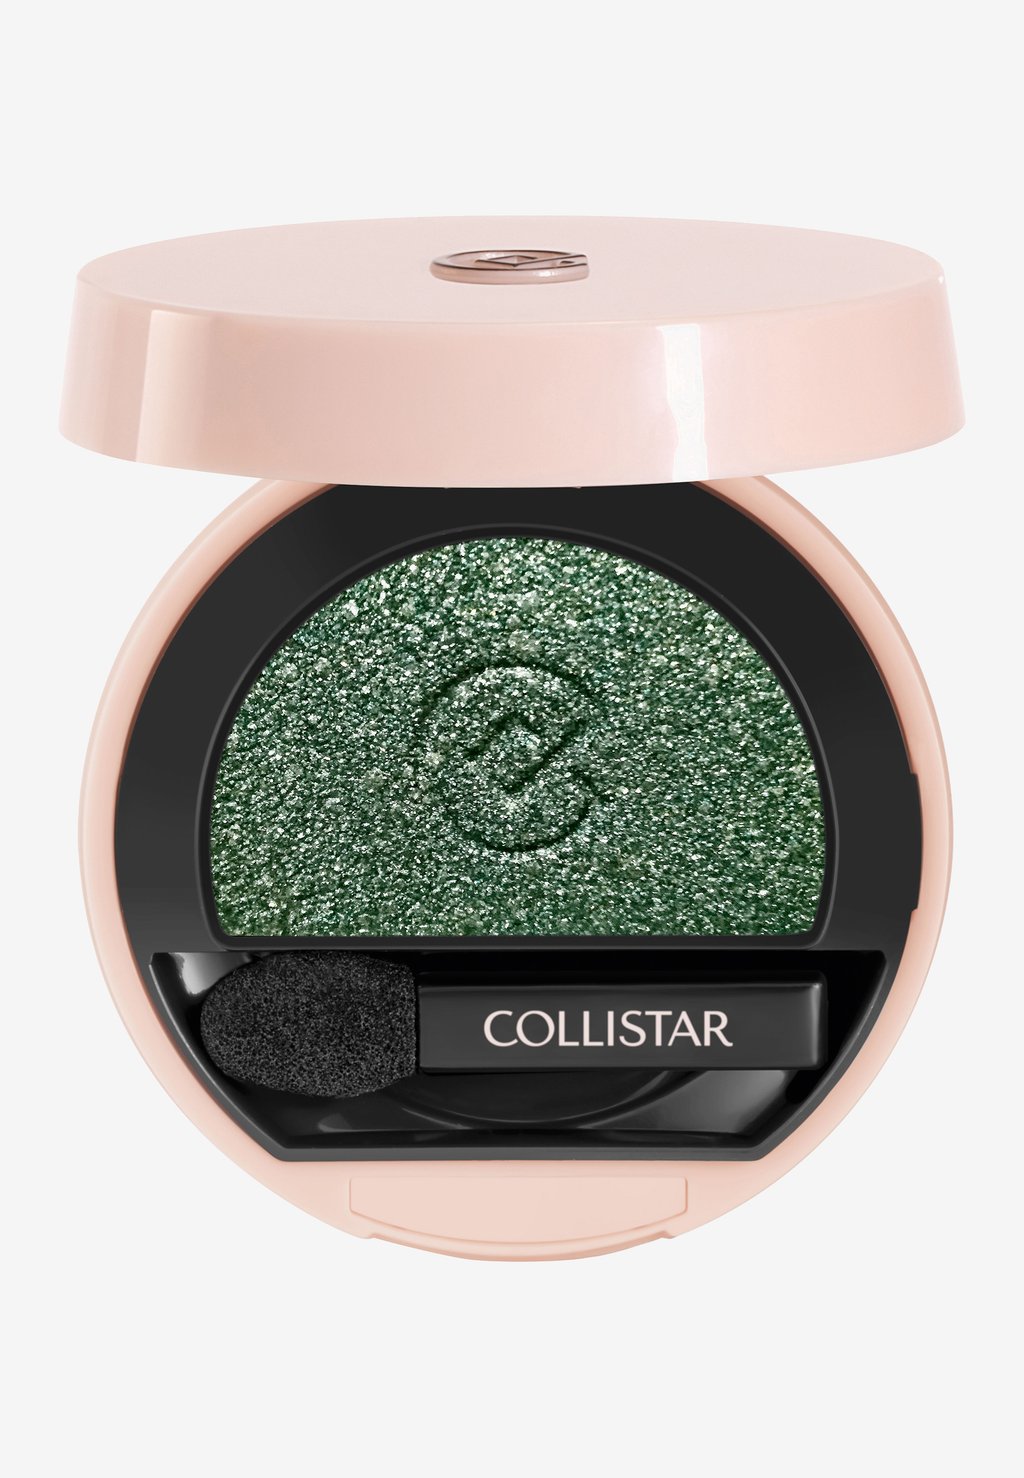 Тени для век Impeccable Compact Eye Shadow Collistar, цвет n.340 smeraldo frost